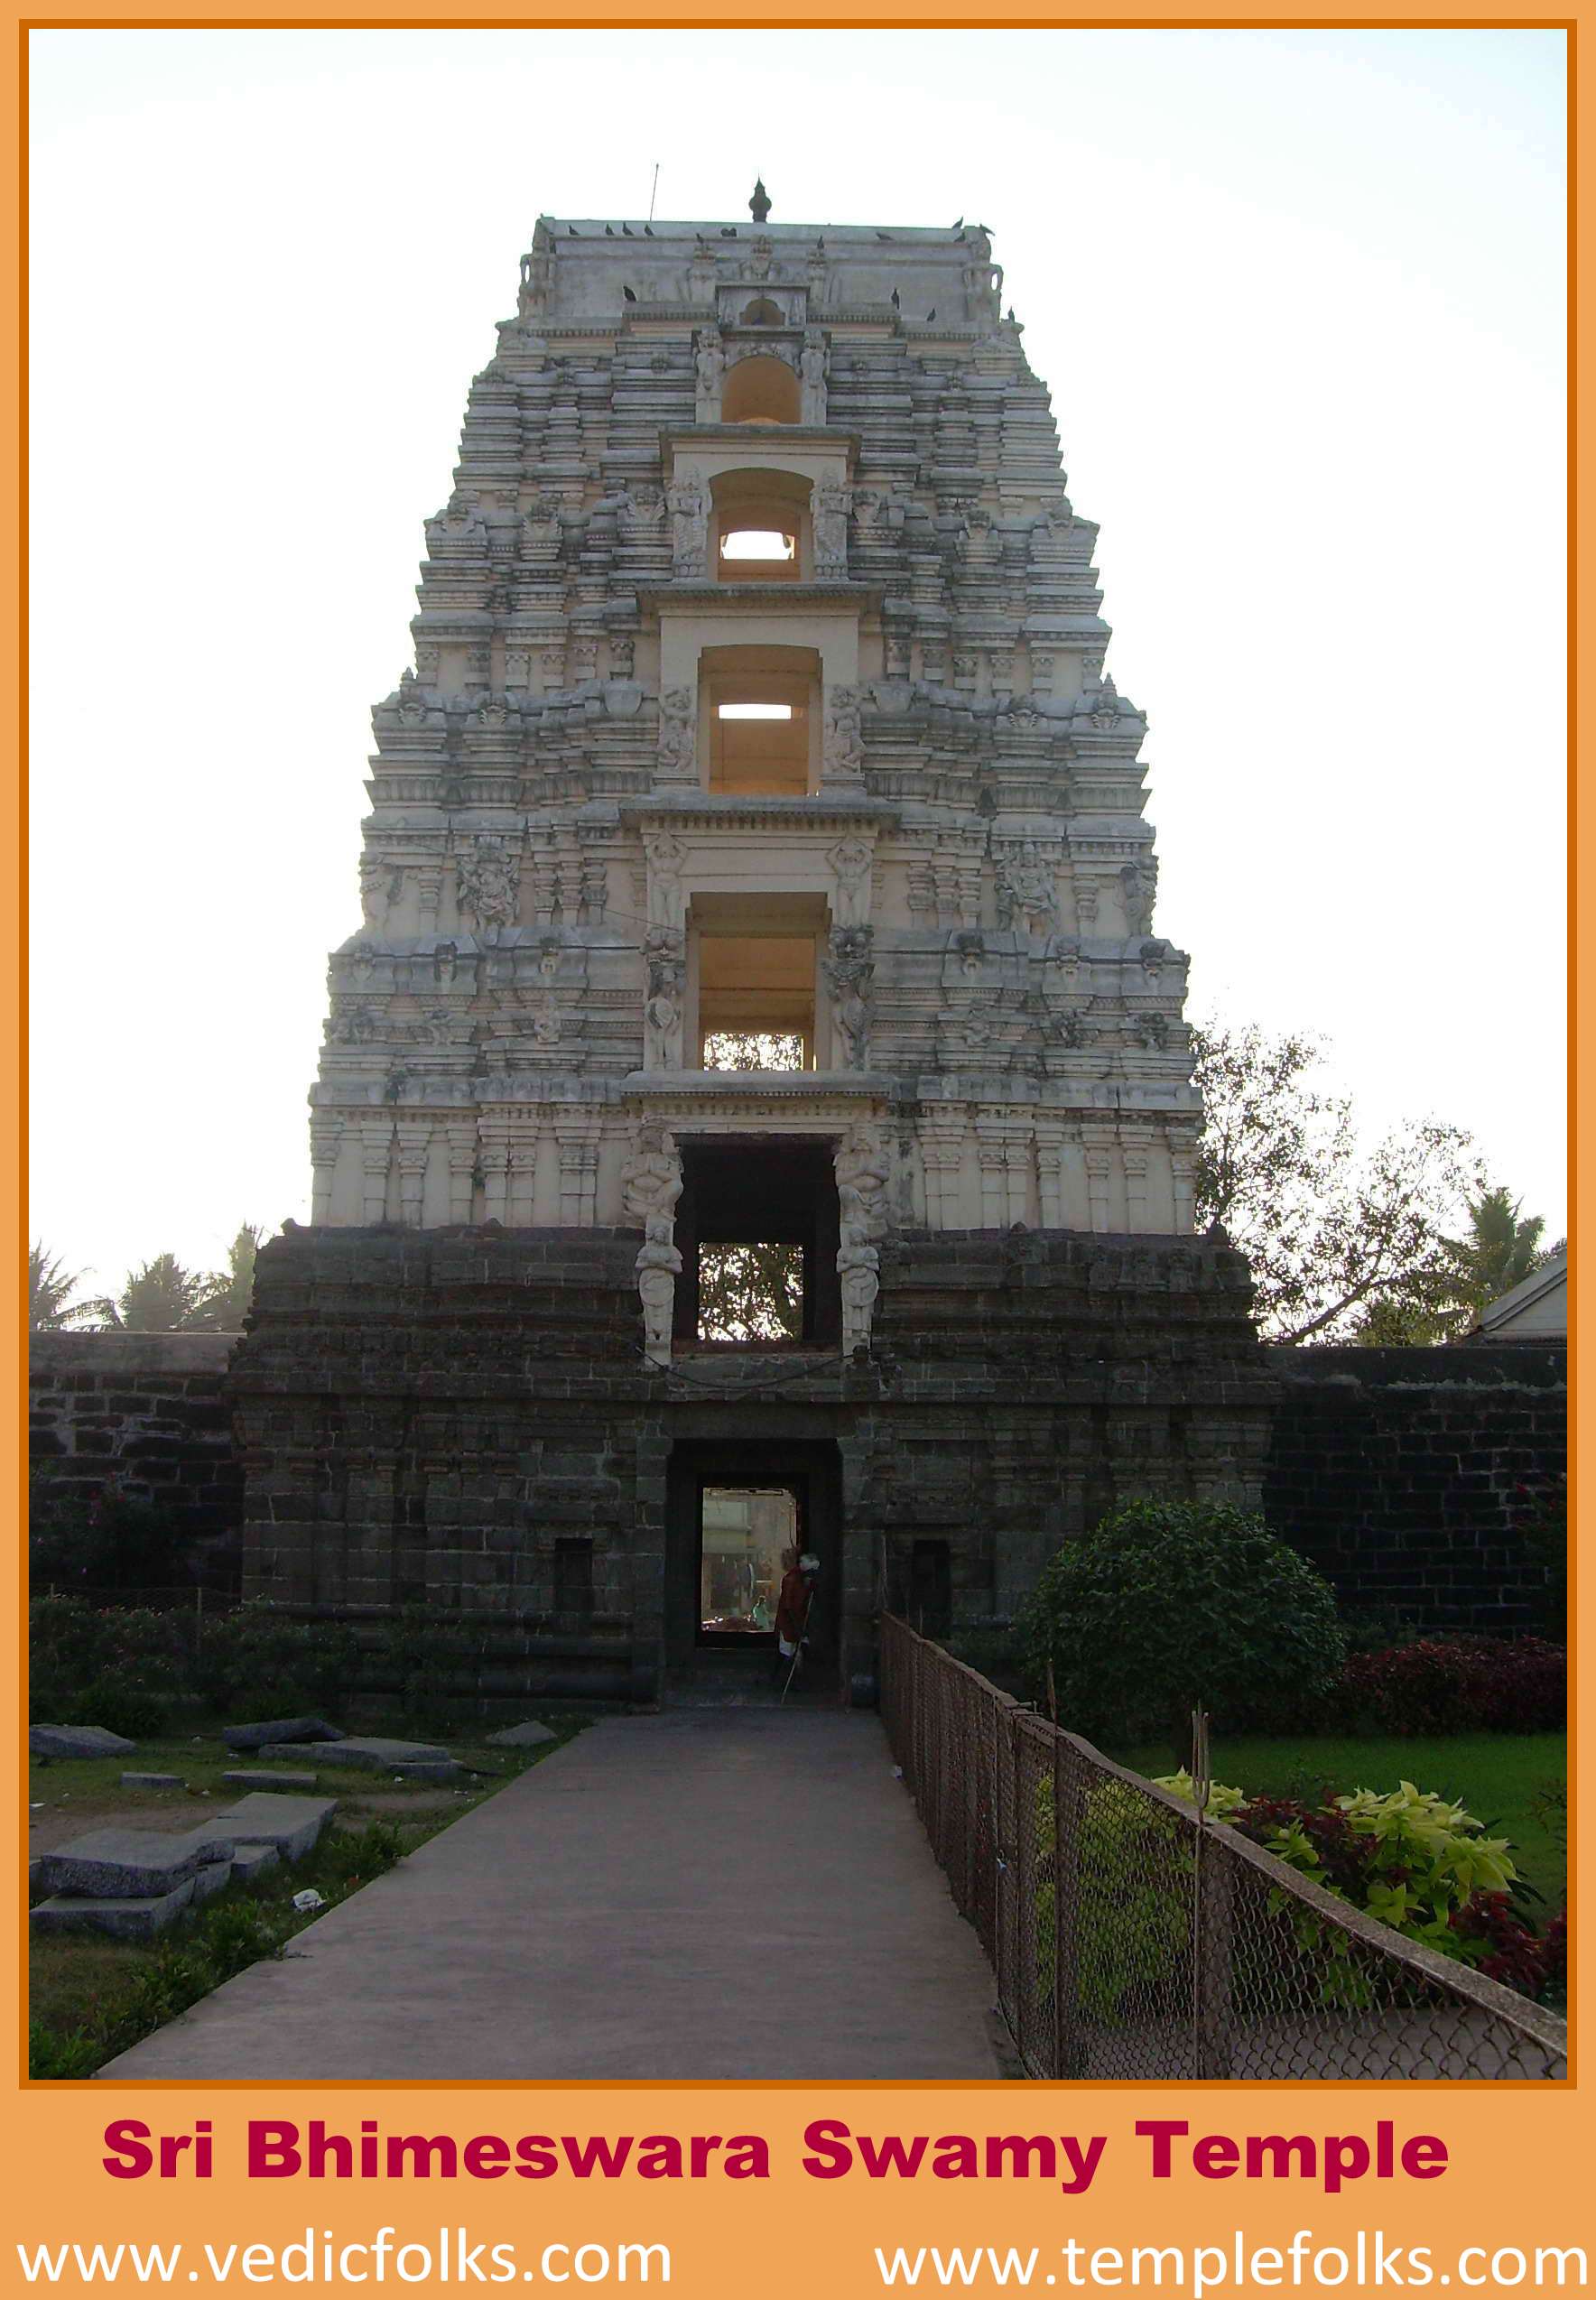 Sri Bhimeswara Swamy temple